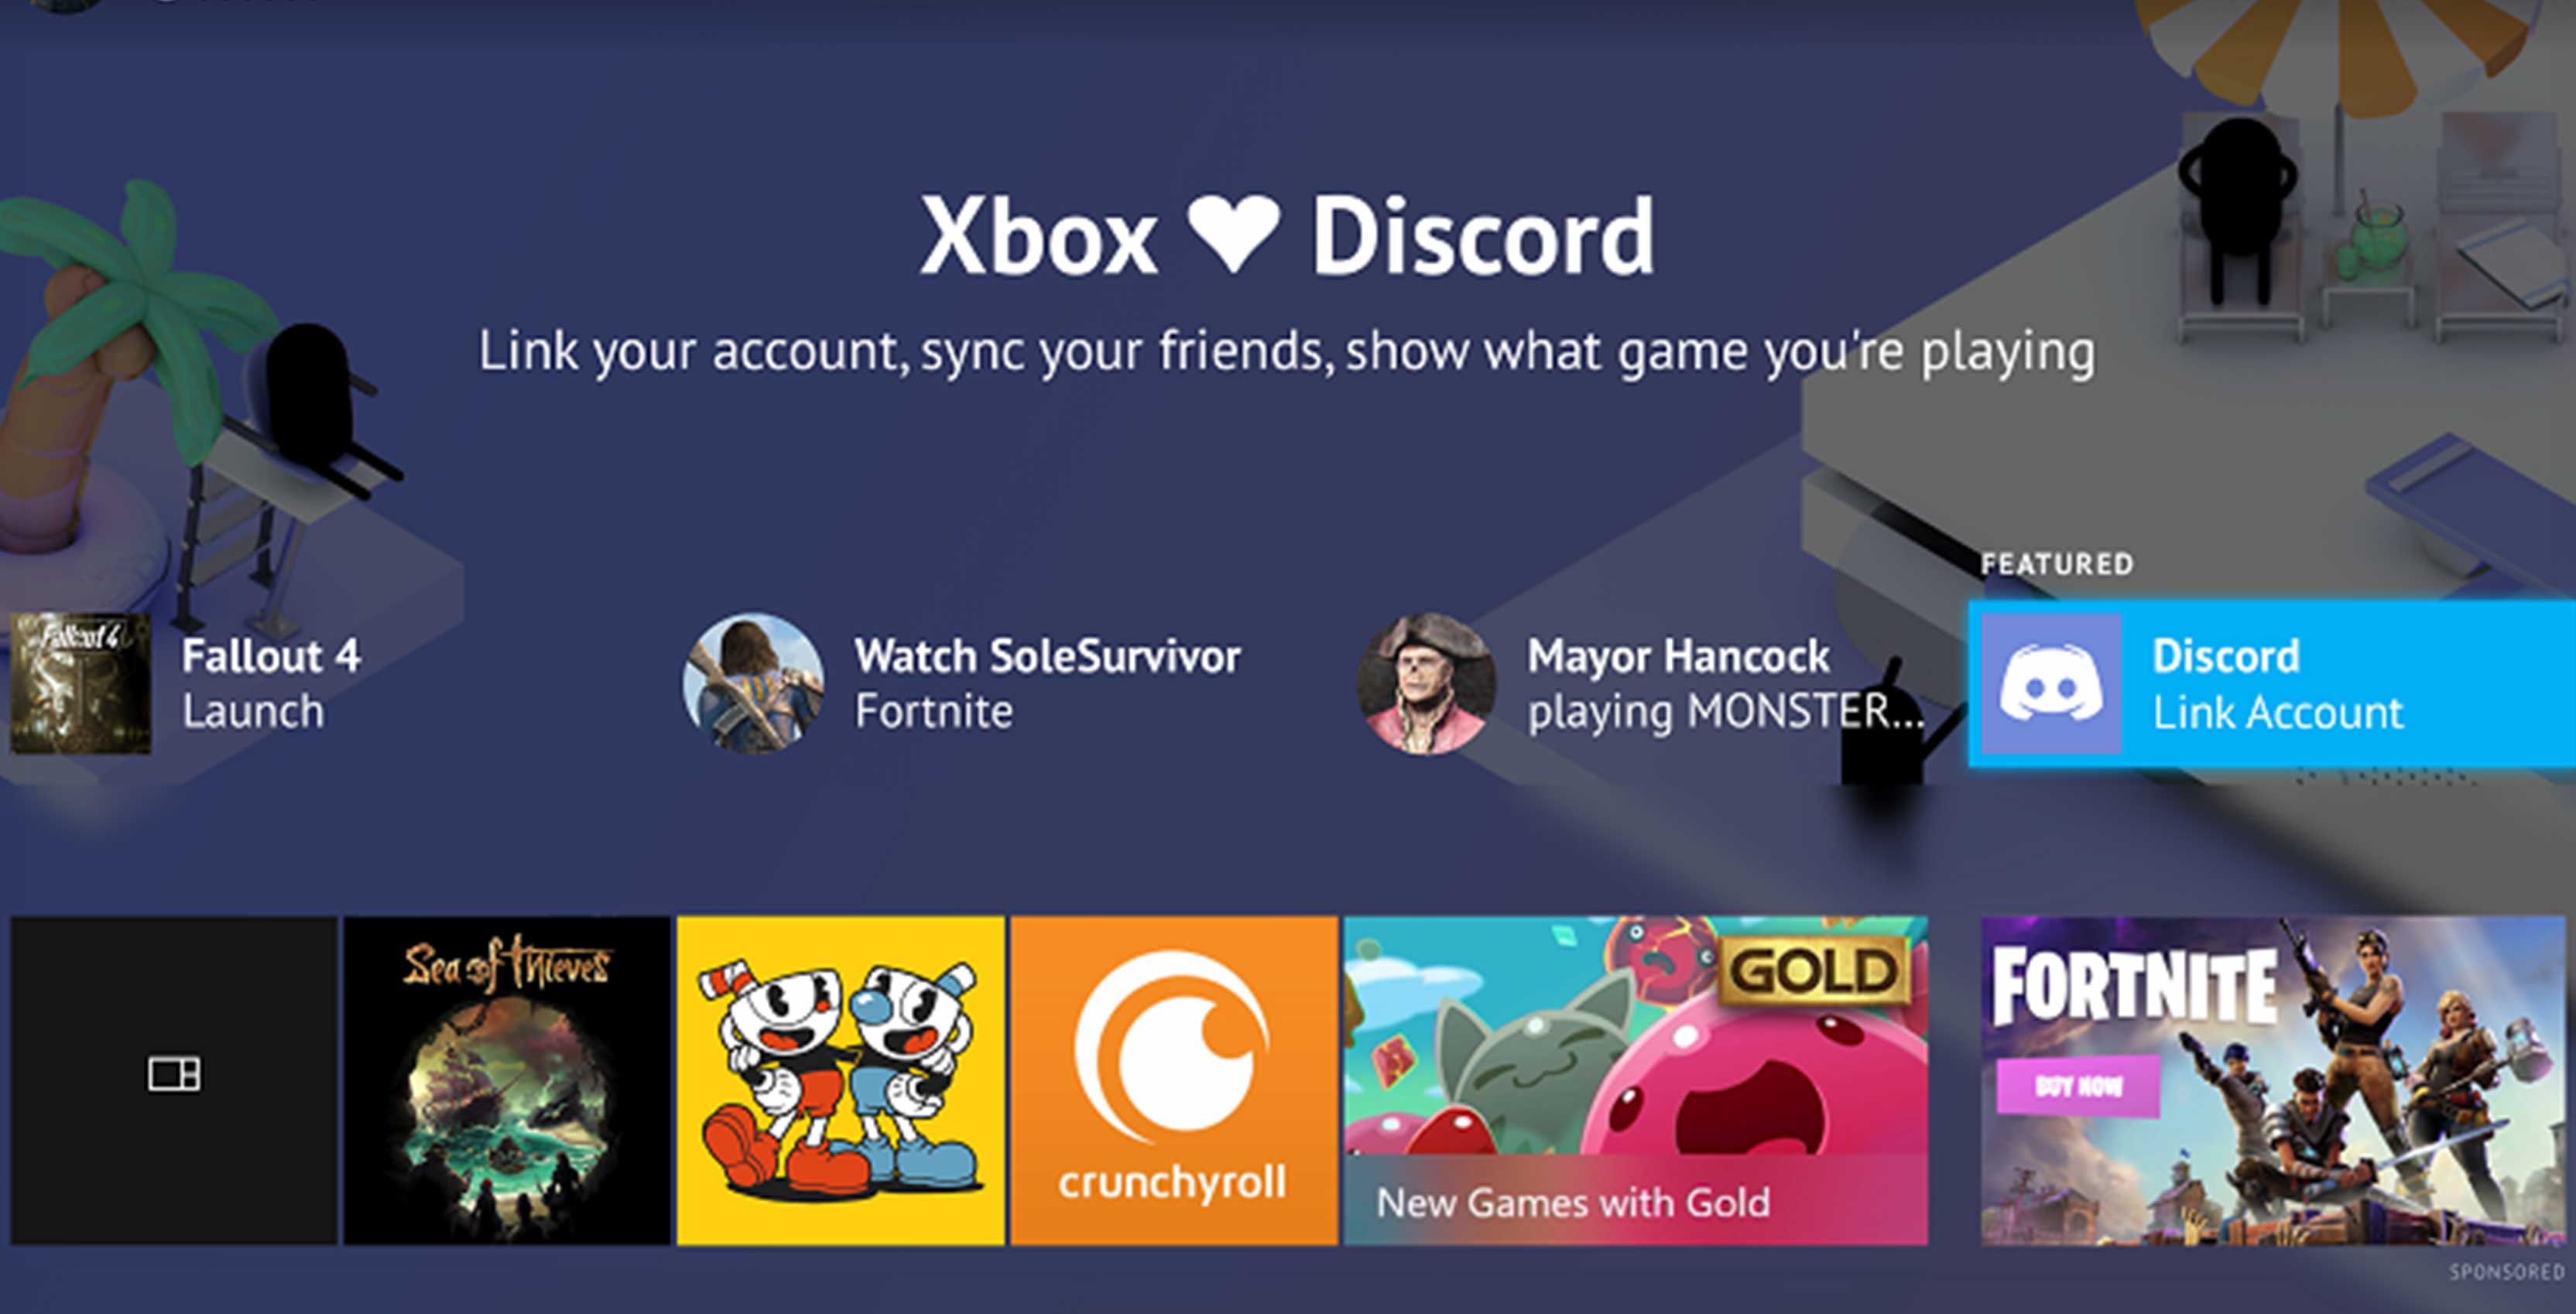 discord xbox game pass